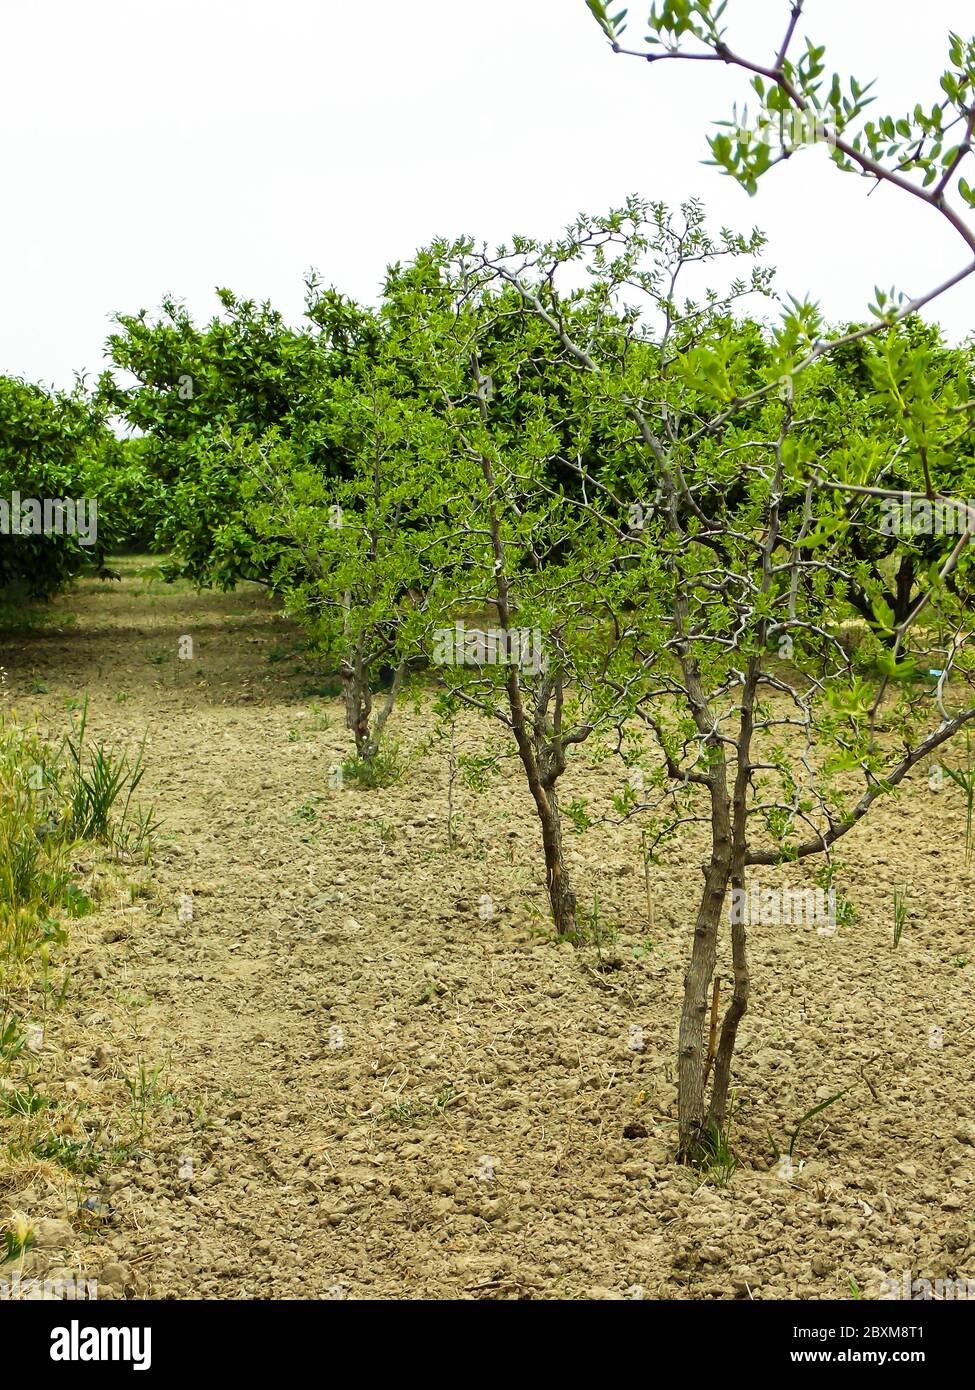 Jujube plant tree growing in field Stock Photo